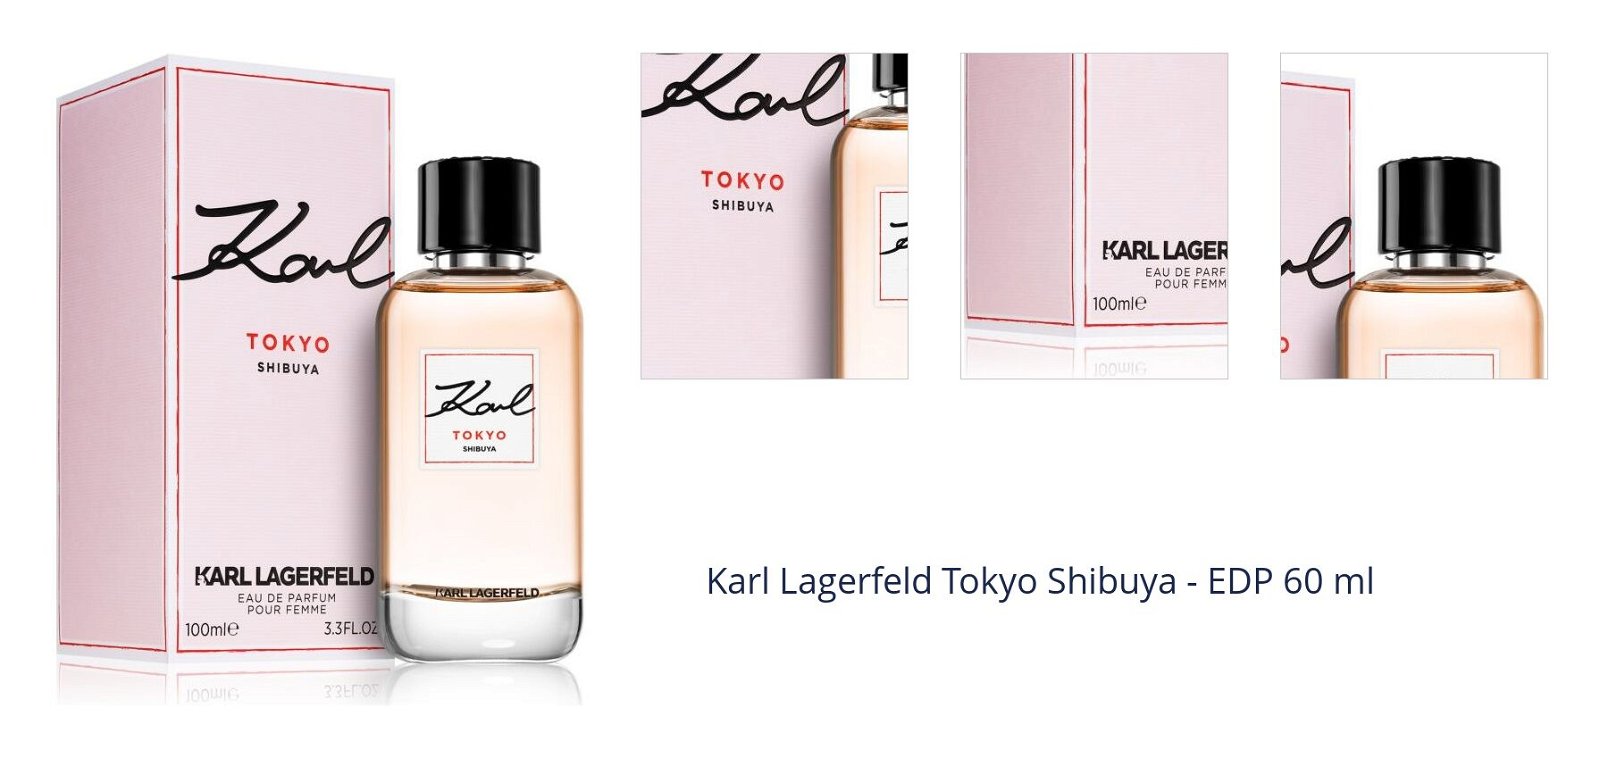 Karl Lagerfeld Tokyo Shibuya - EDP 60 ml 7